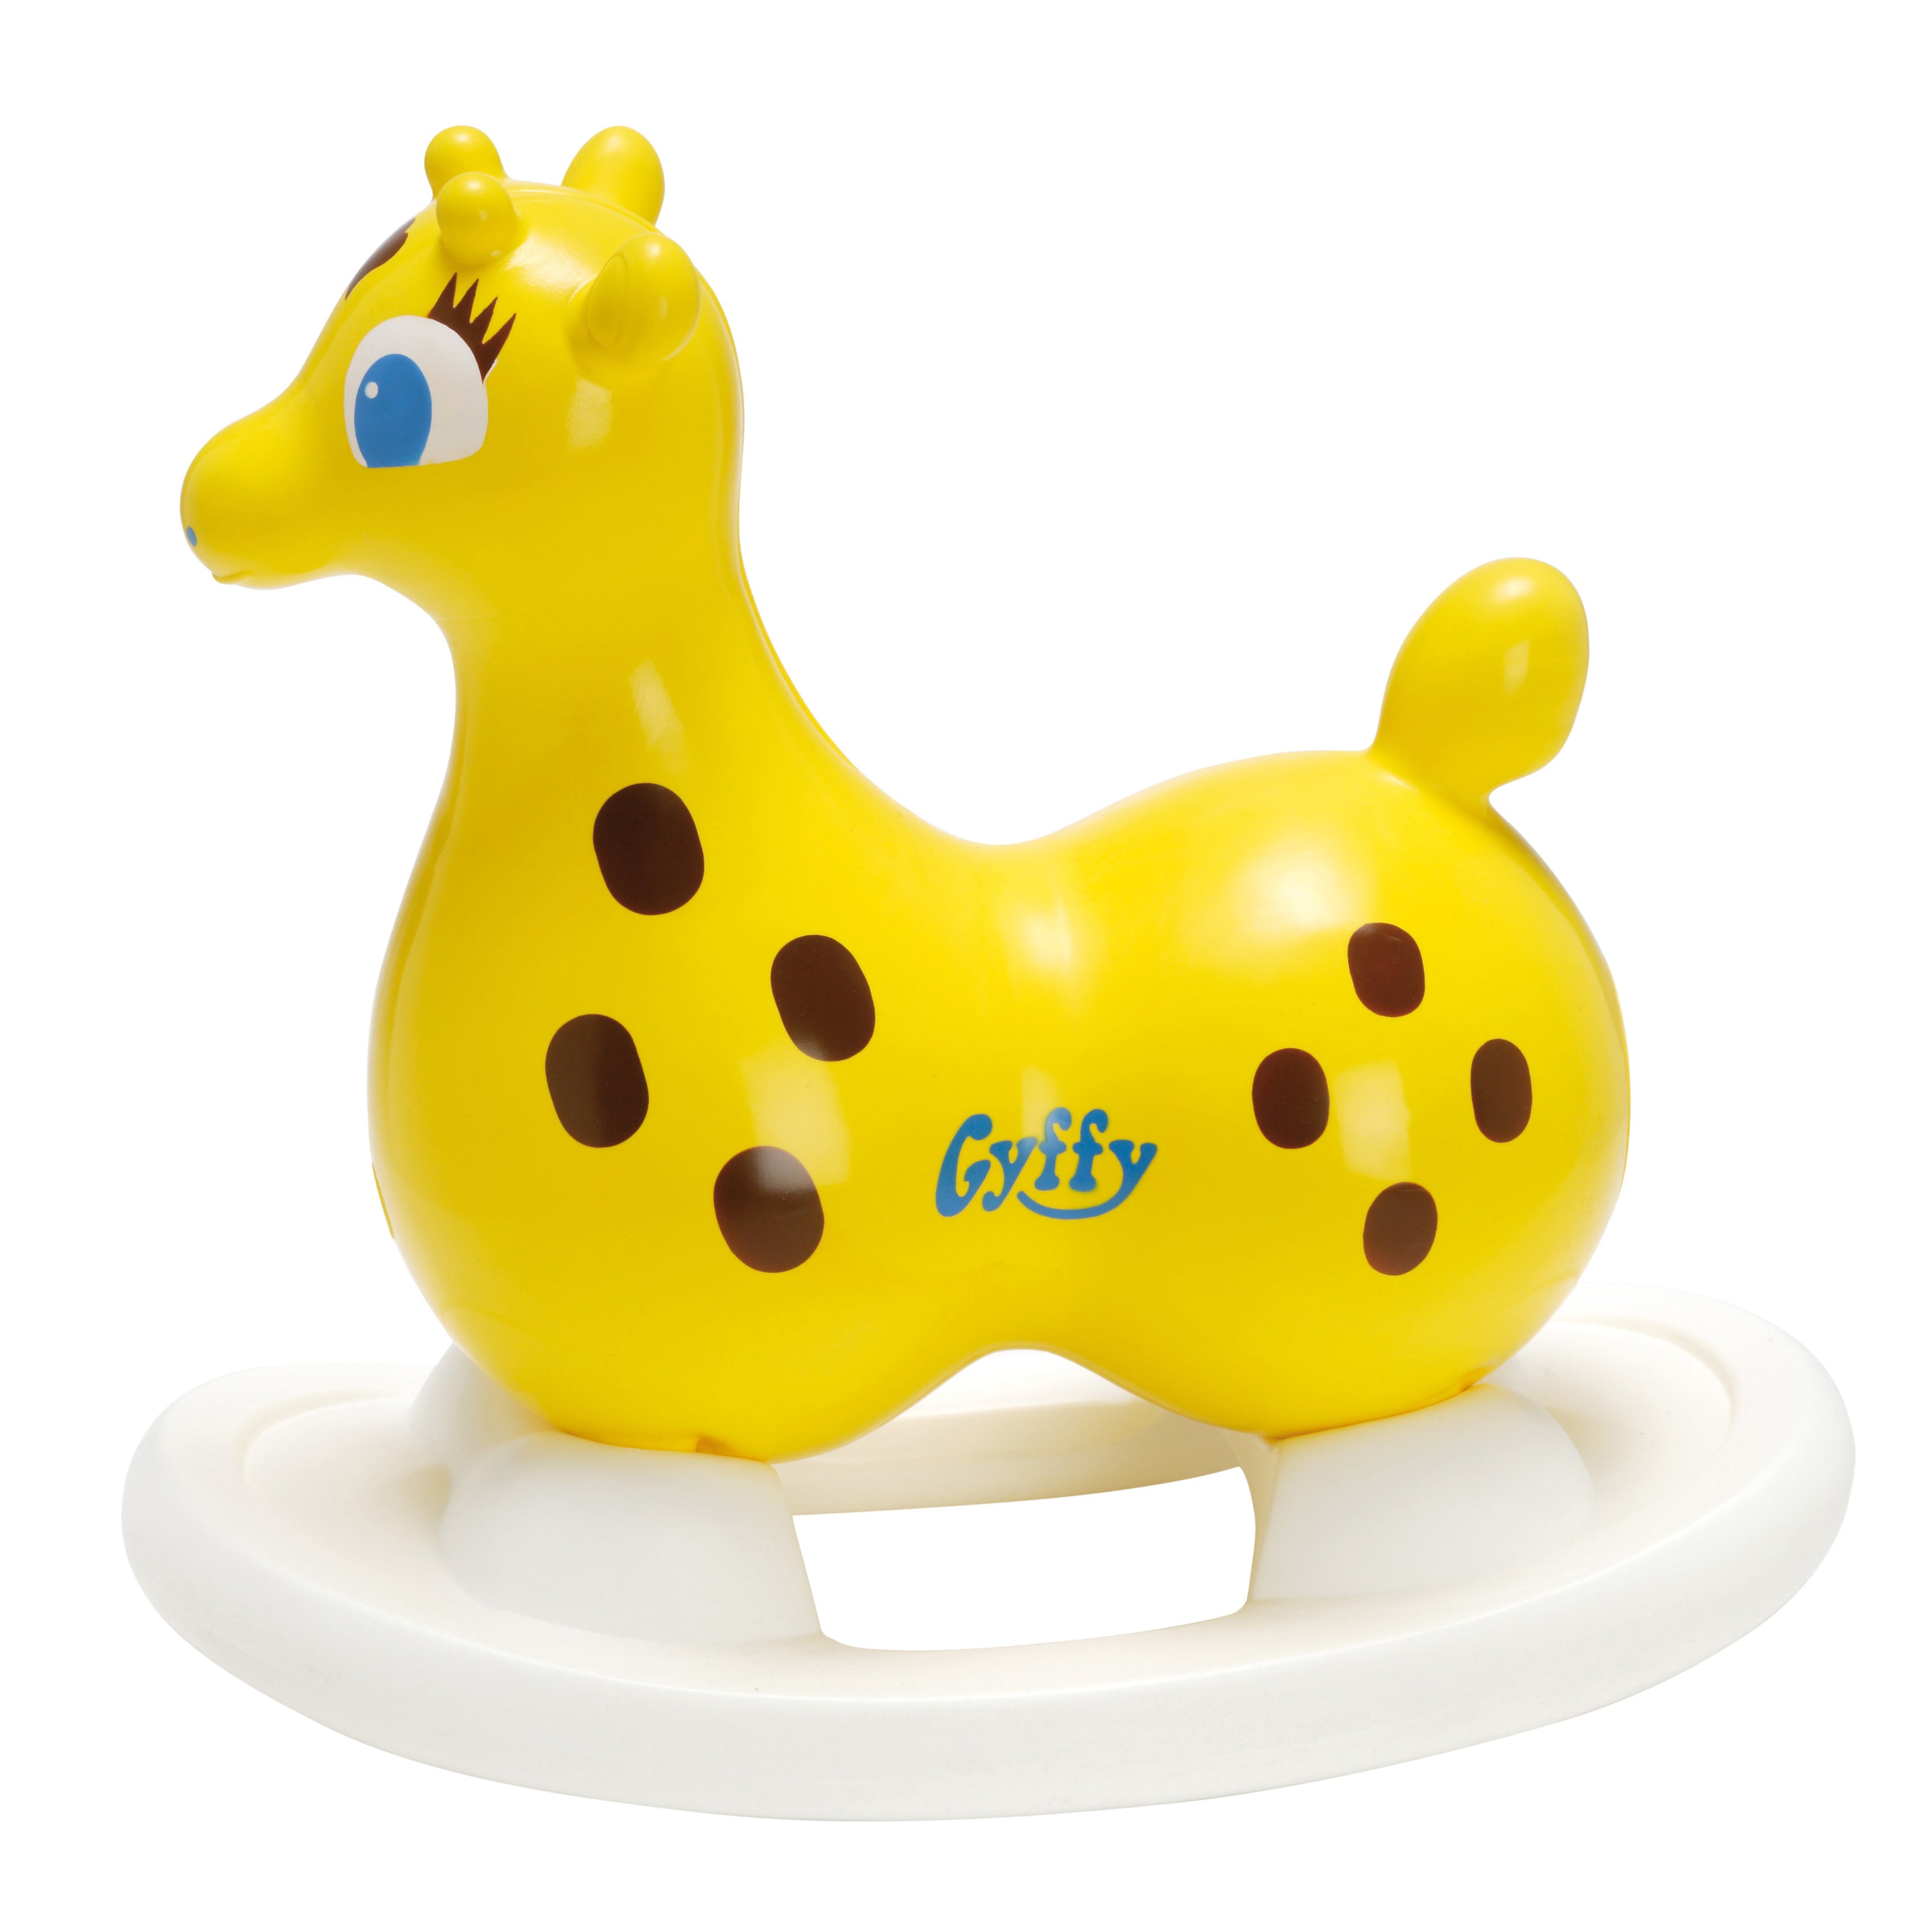 Gyffy The Giraffe Bounce Toy With Rocking Base